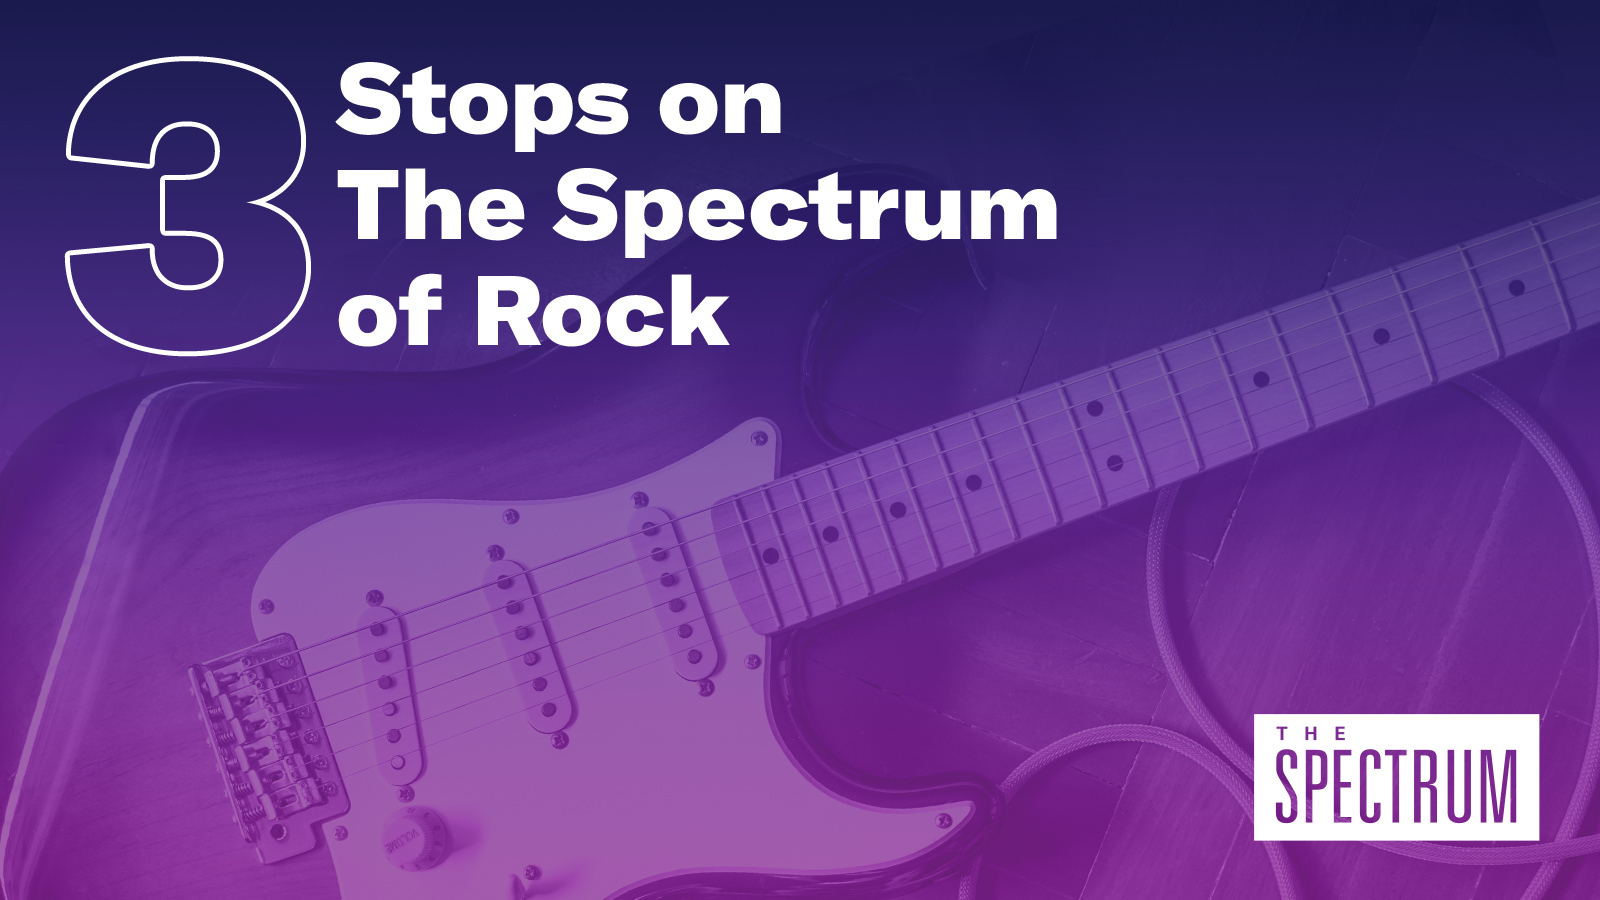 SiriusXM Spectrum 3 Stops on the Spectrum of Rock